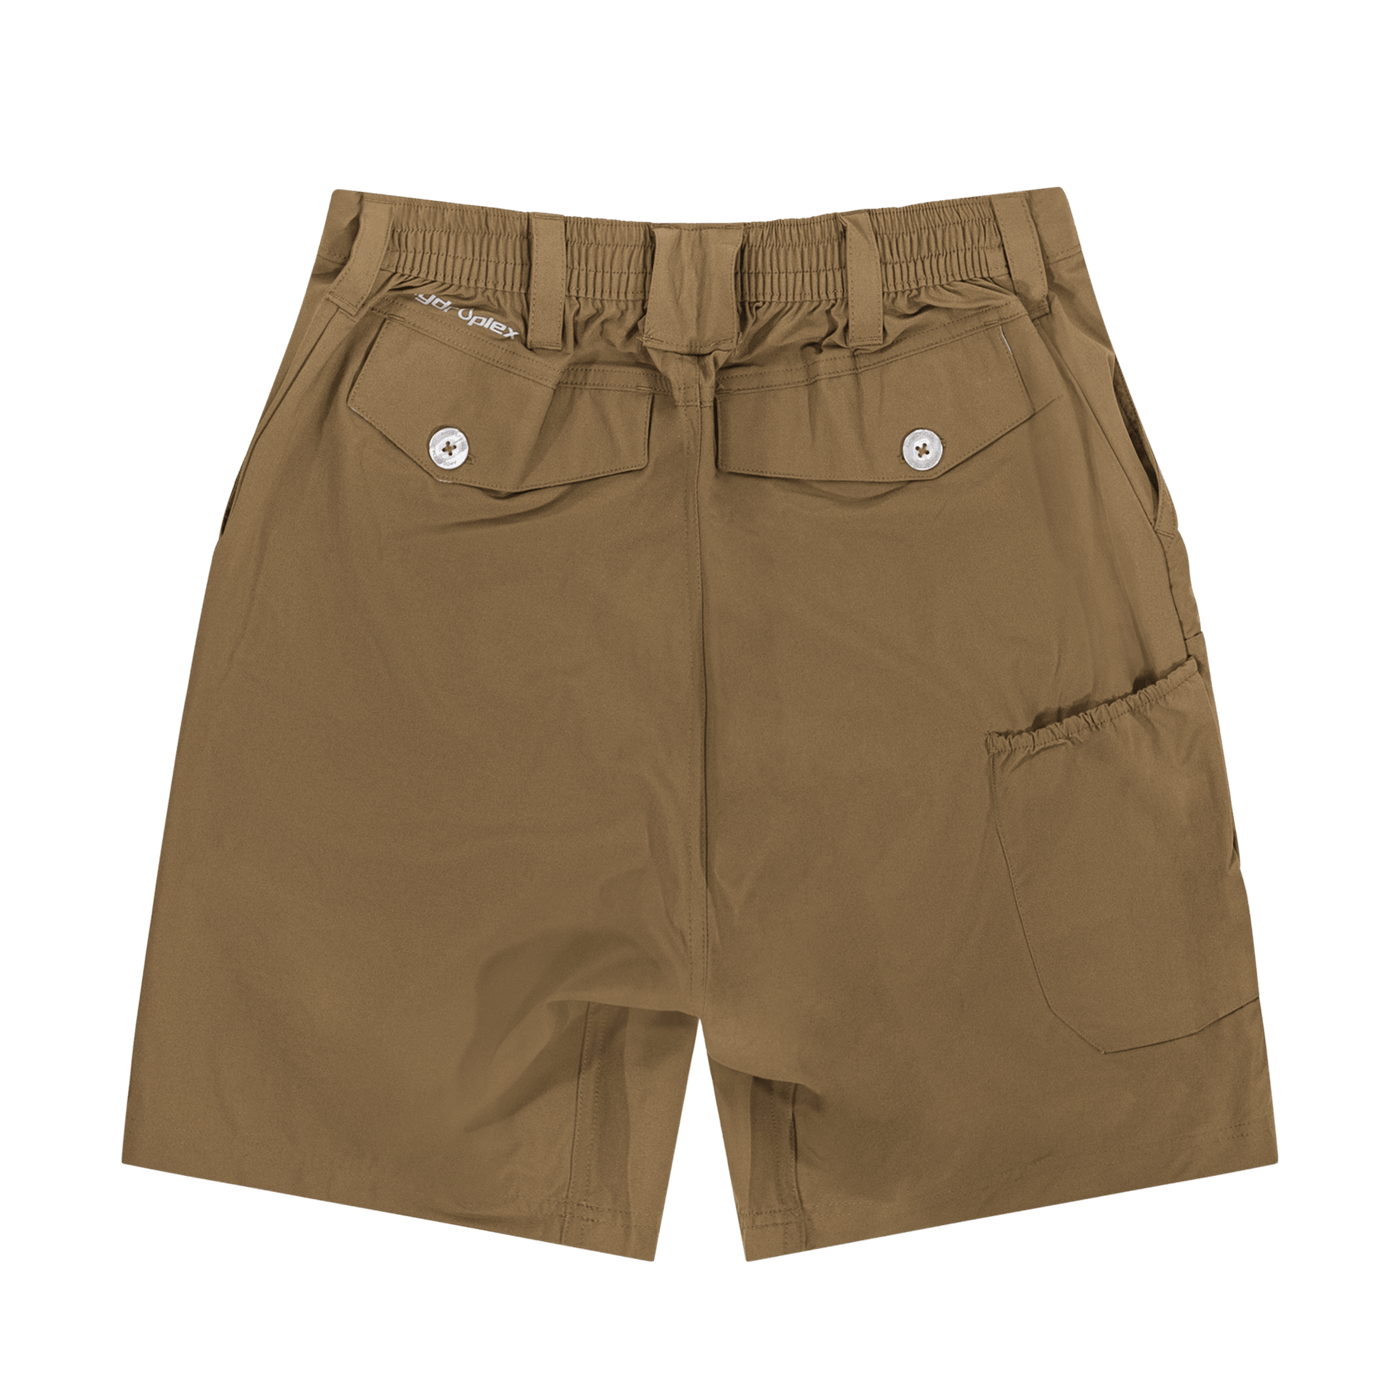 Mossy Oak Mens Flex Fishing Shorts Tan